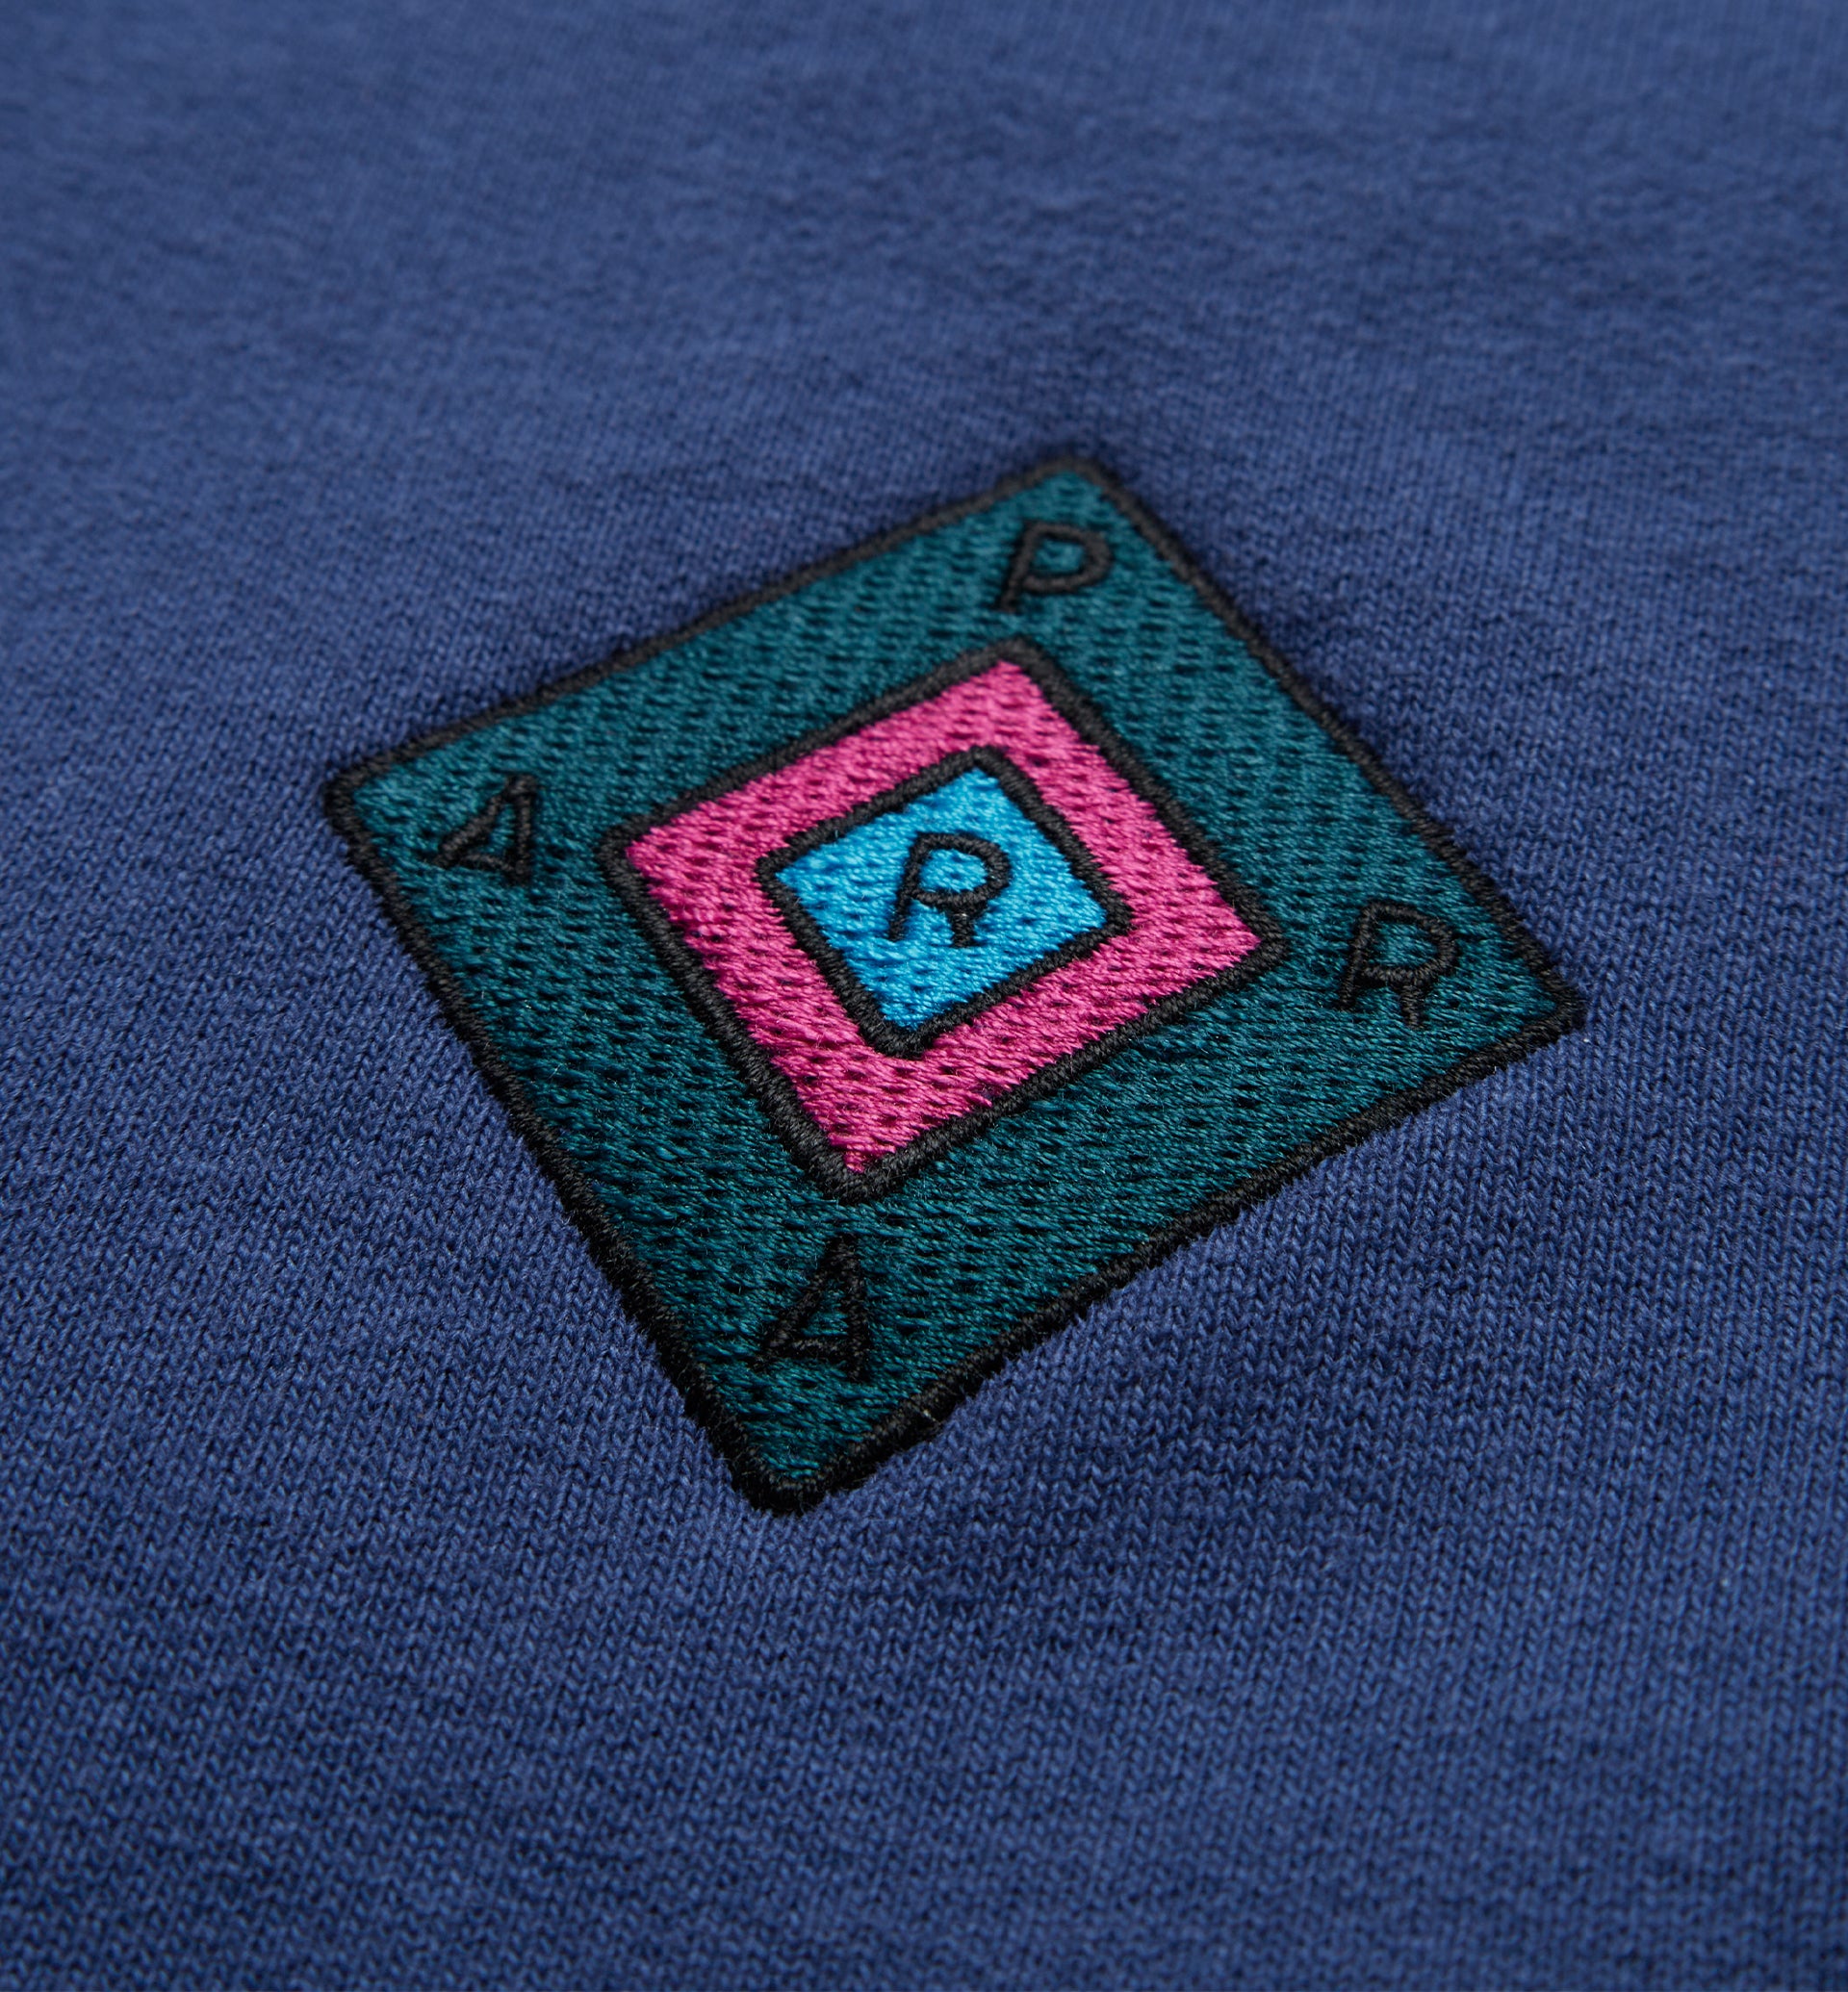 Parra - diamond block logo crew neck sweatshirt